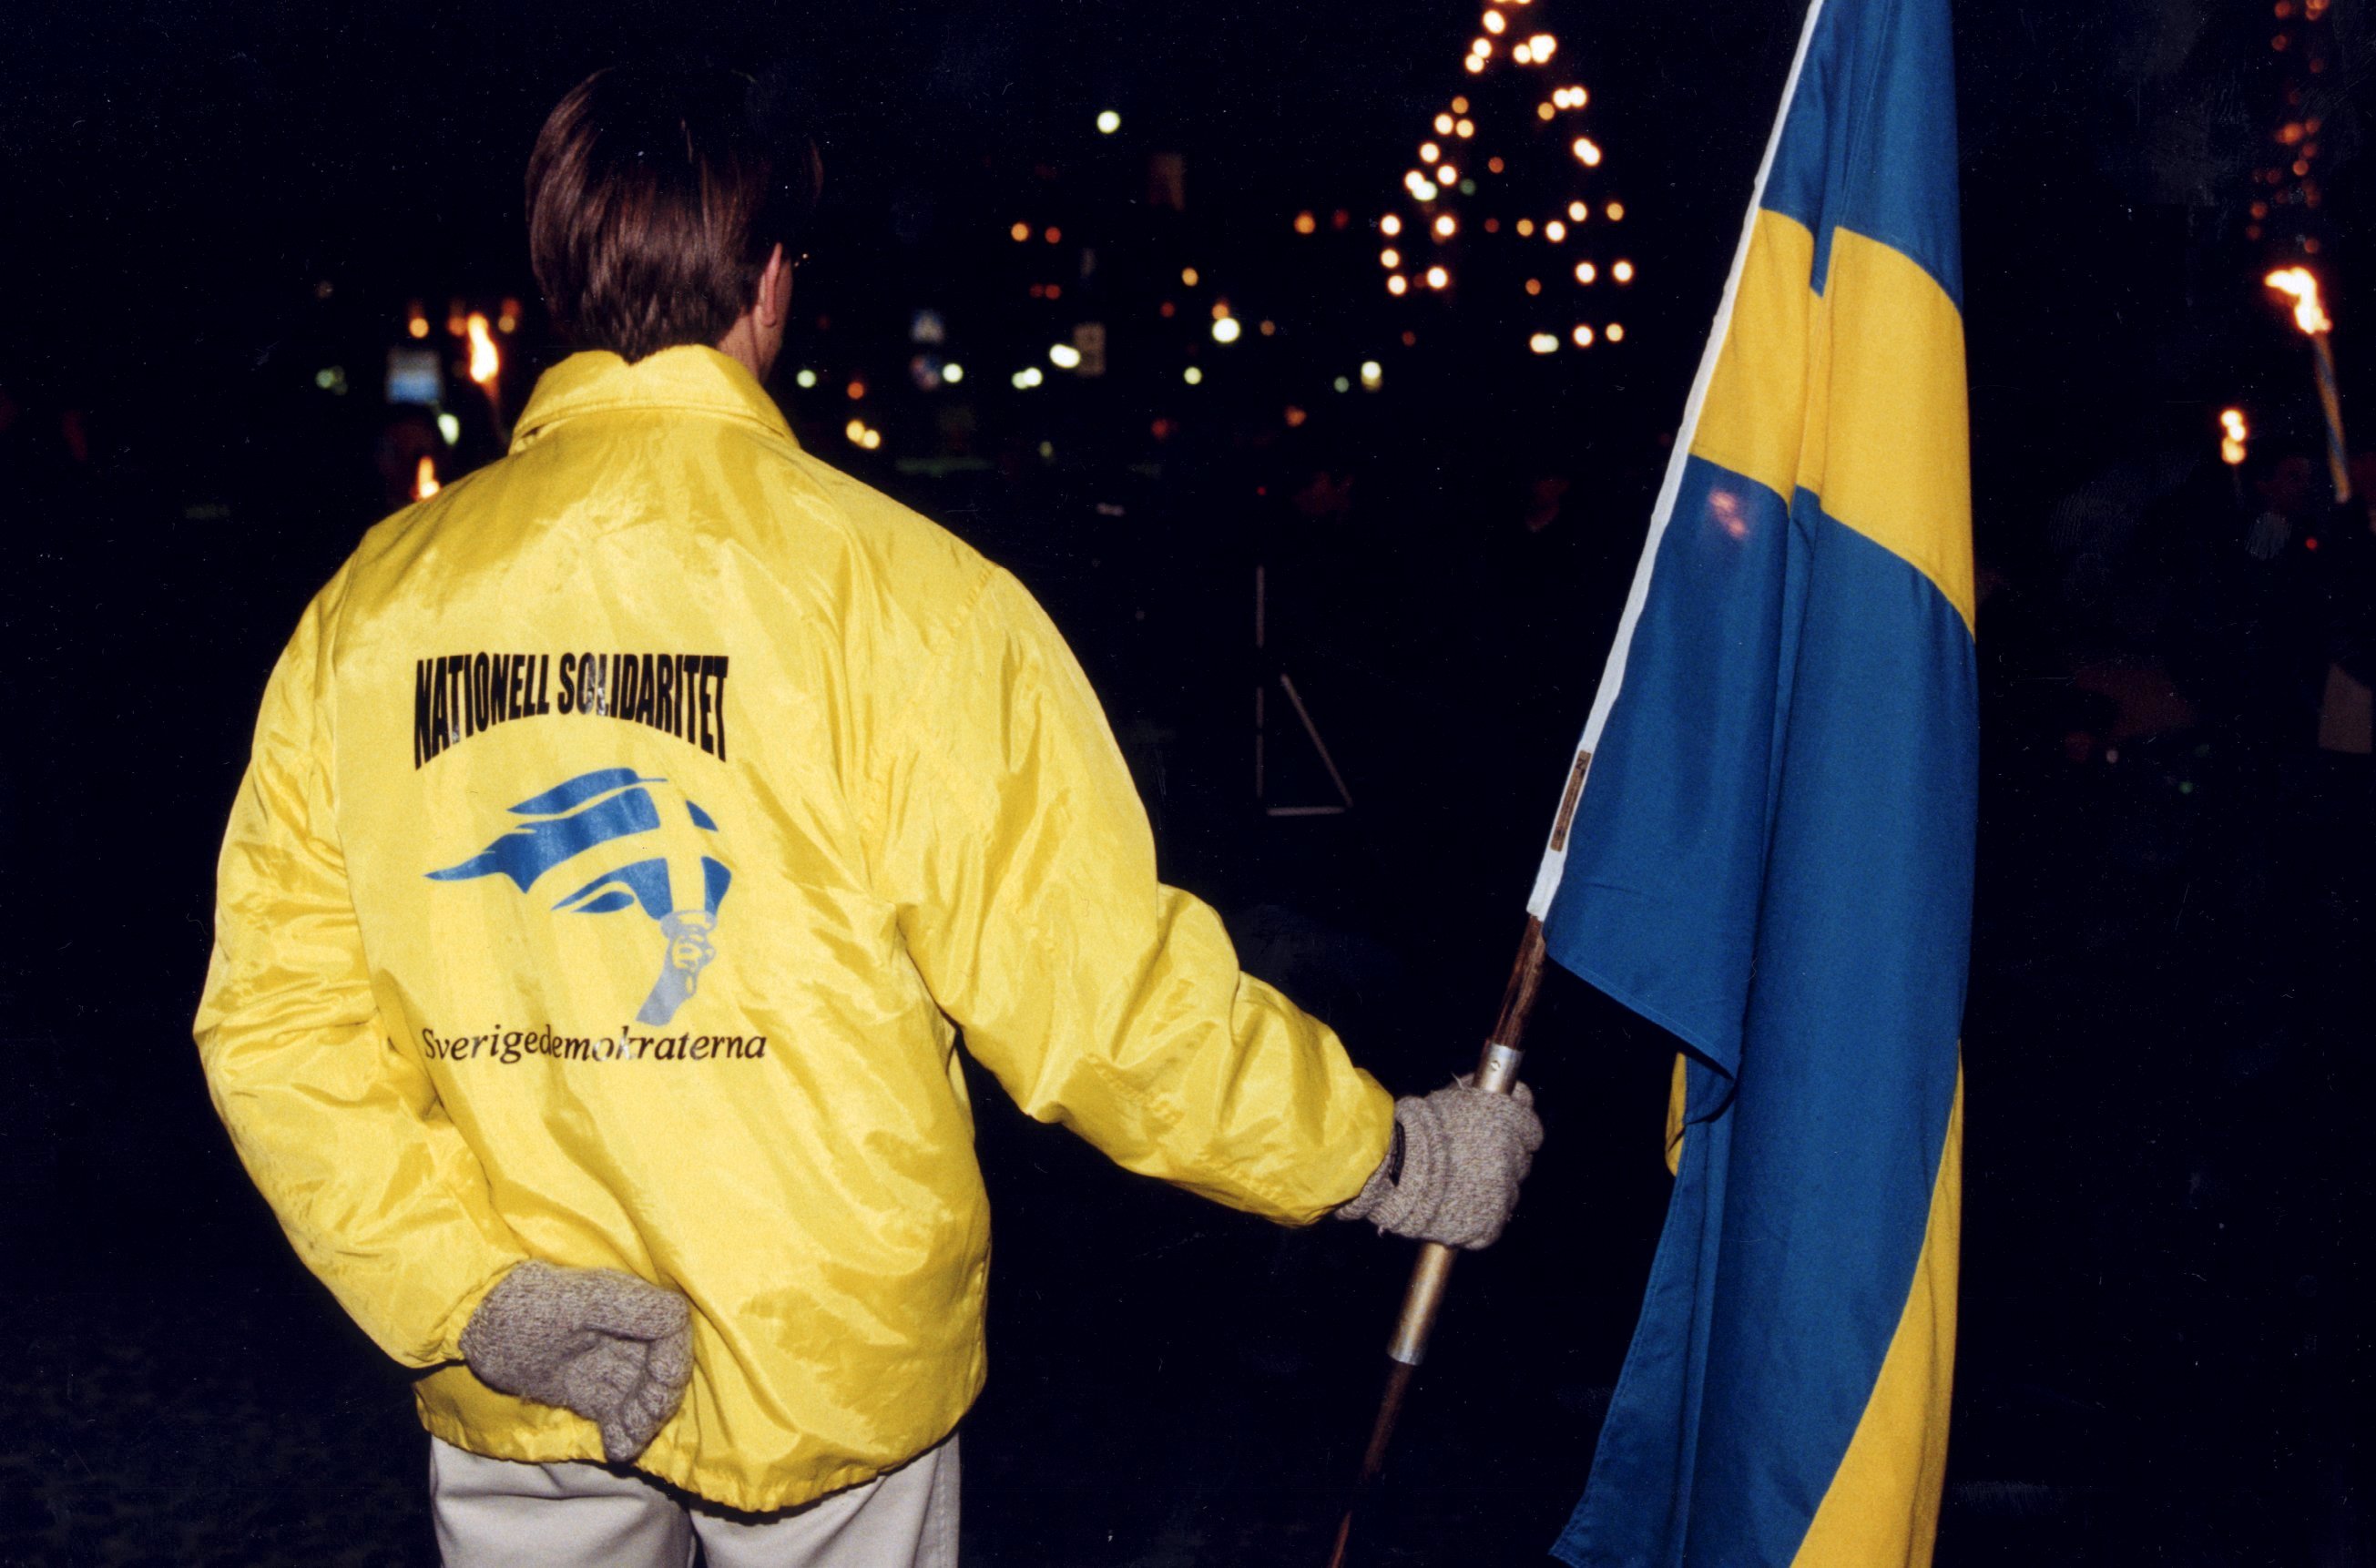 Riksdagsvalet 2010, Stureplan, gatuvåld, Sverigedemokraterna